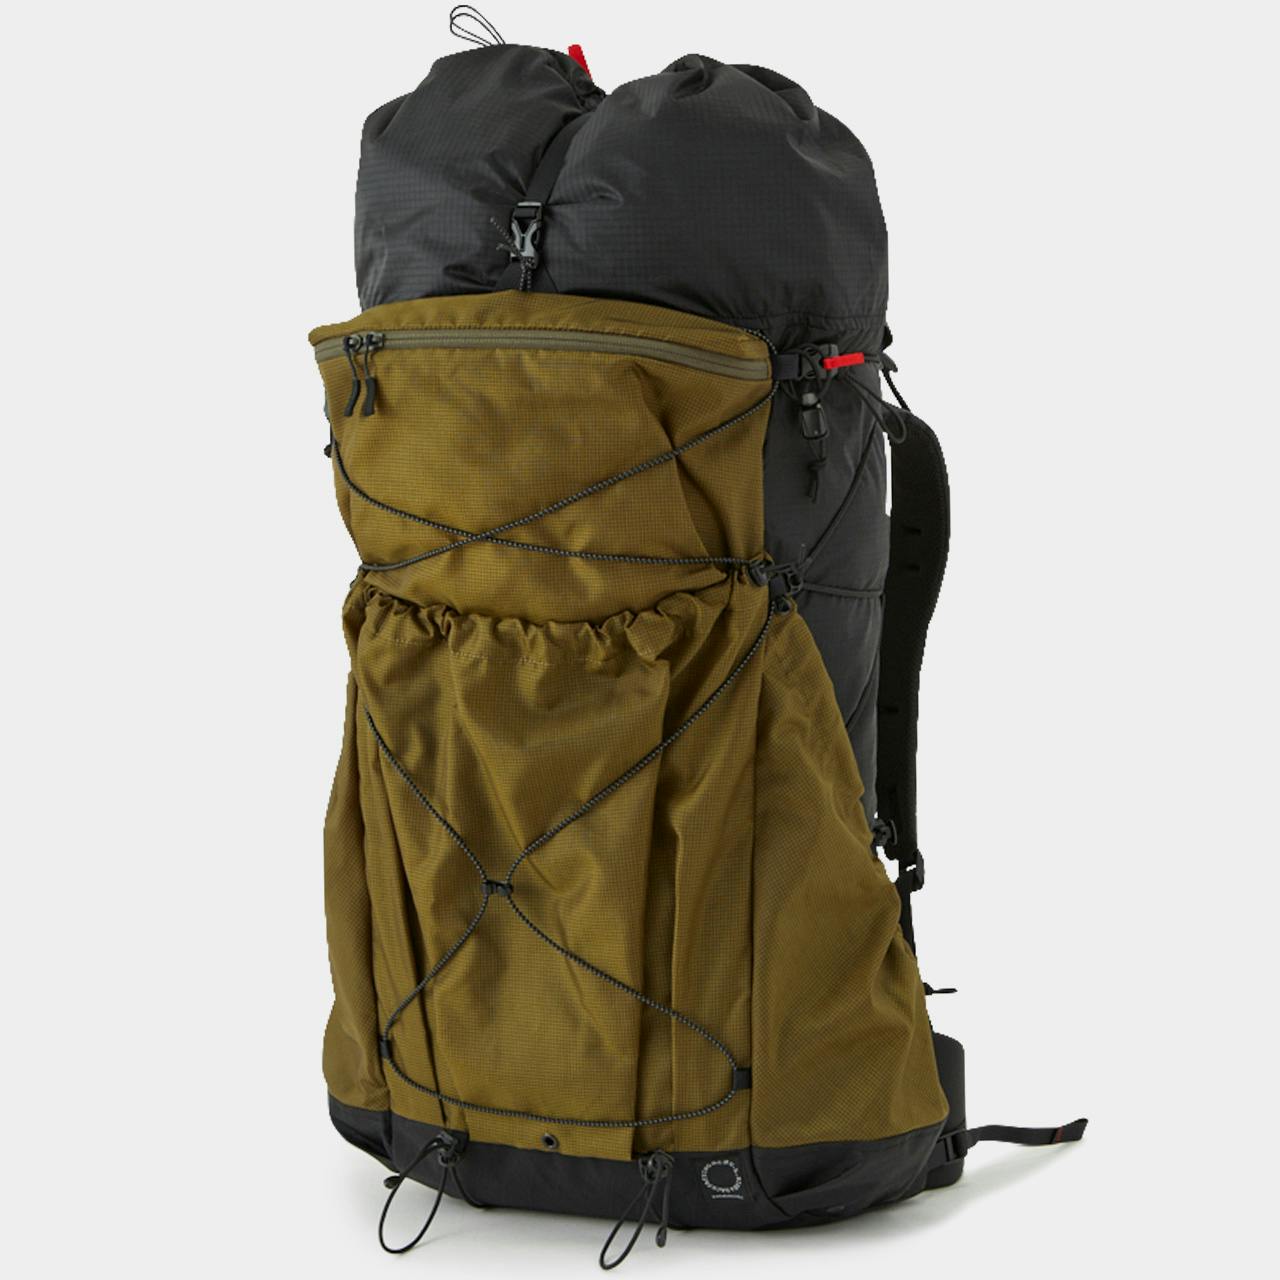 ONE<br>UL Framed Backpack for Long Hikes<br>For Sale August 31, 18:00JST